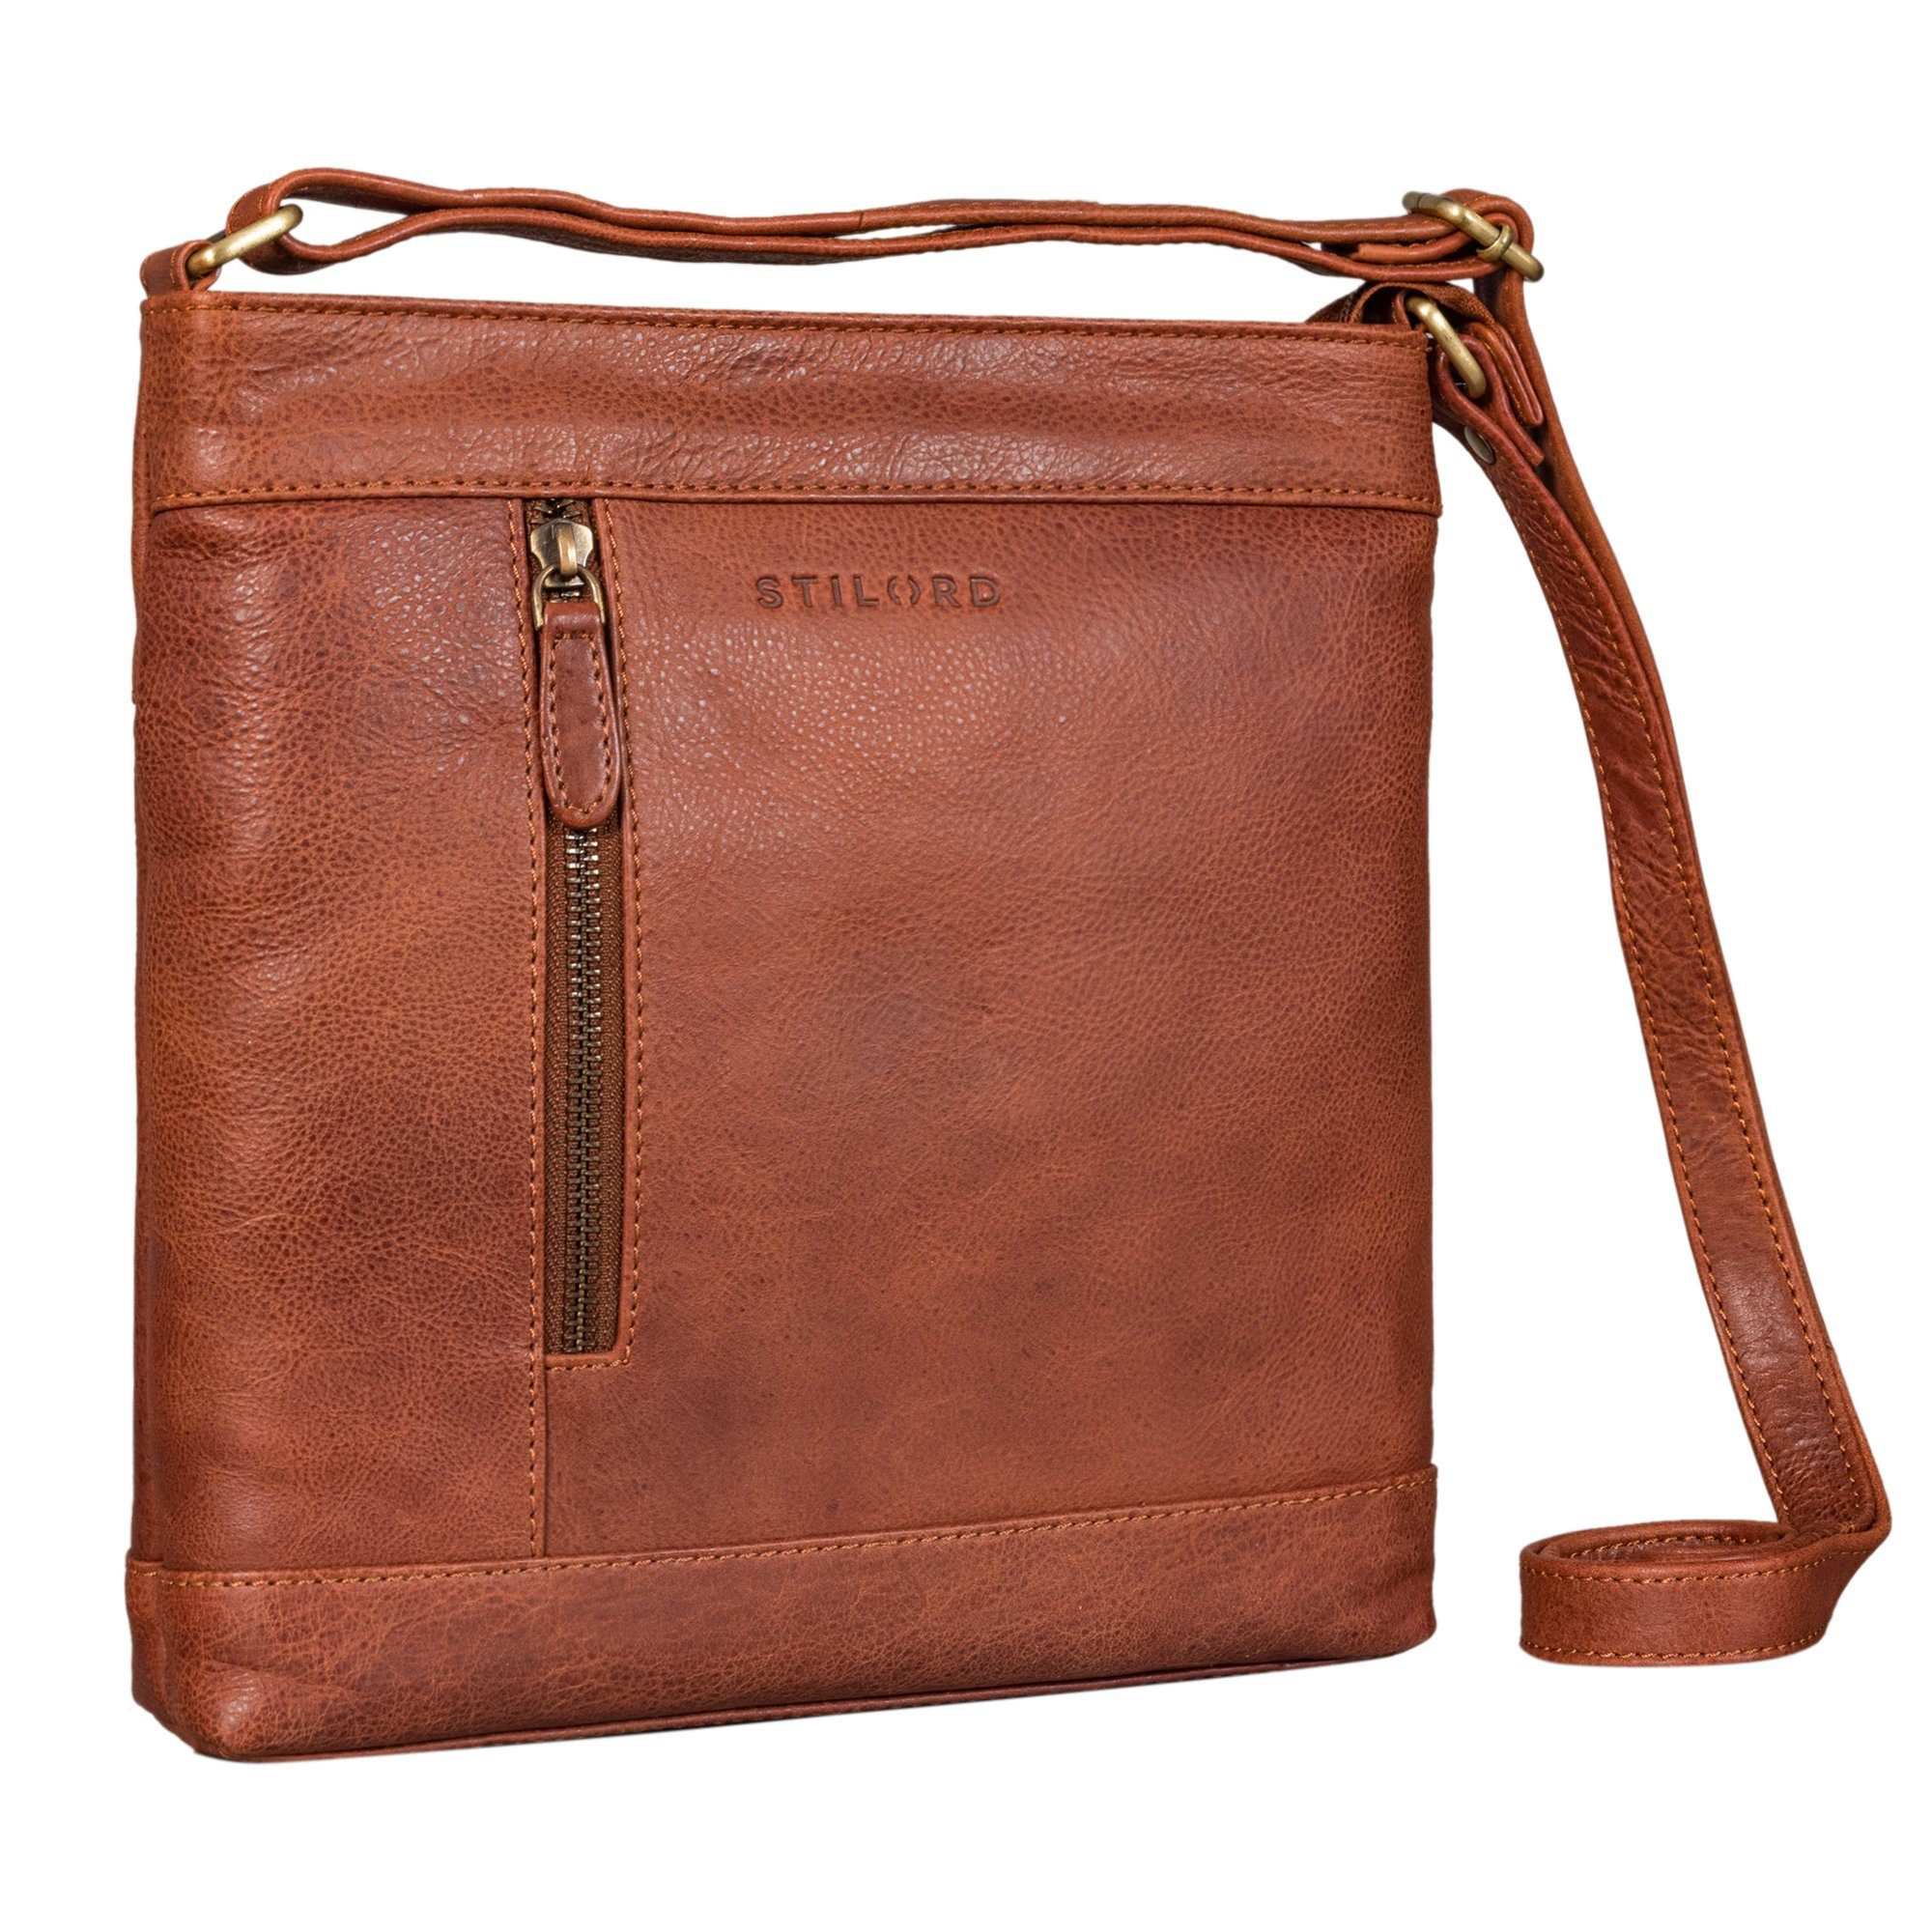 STILORD Handtasche "Moni" Premium Crossbody Bag Damen Leder arona - braun